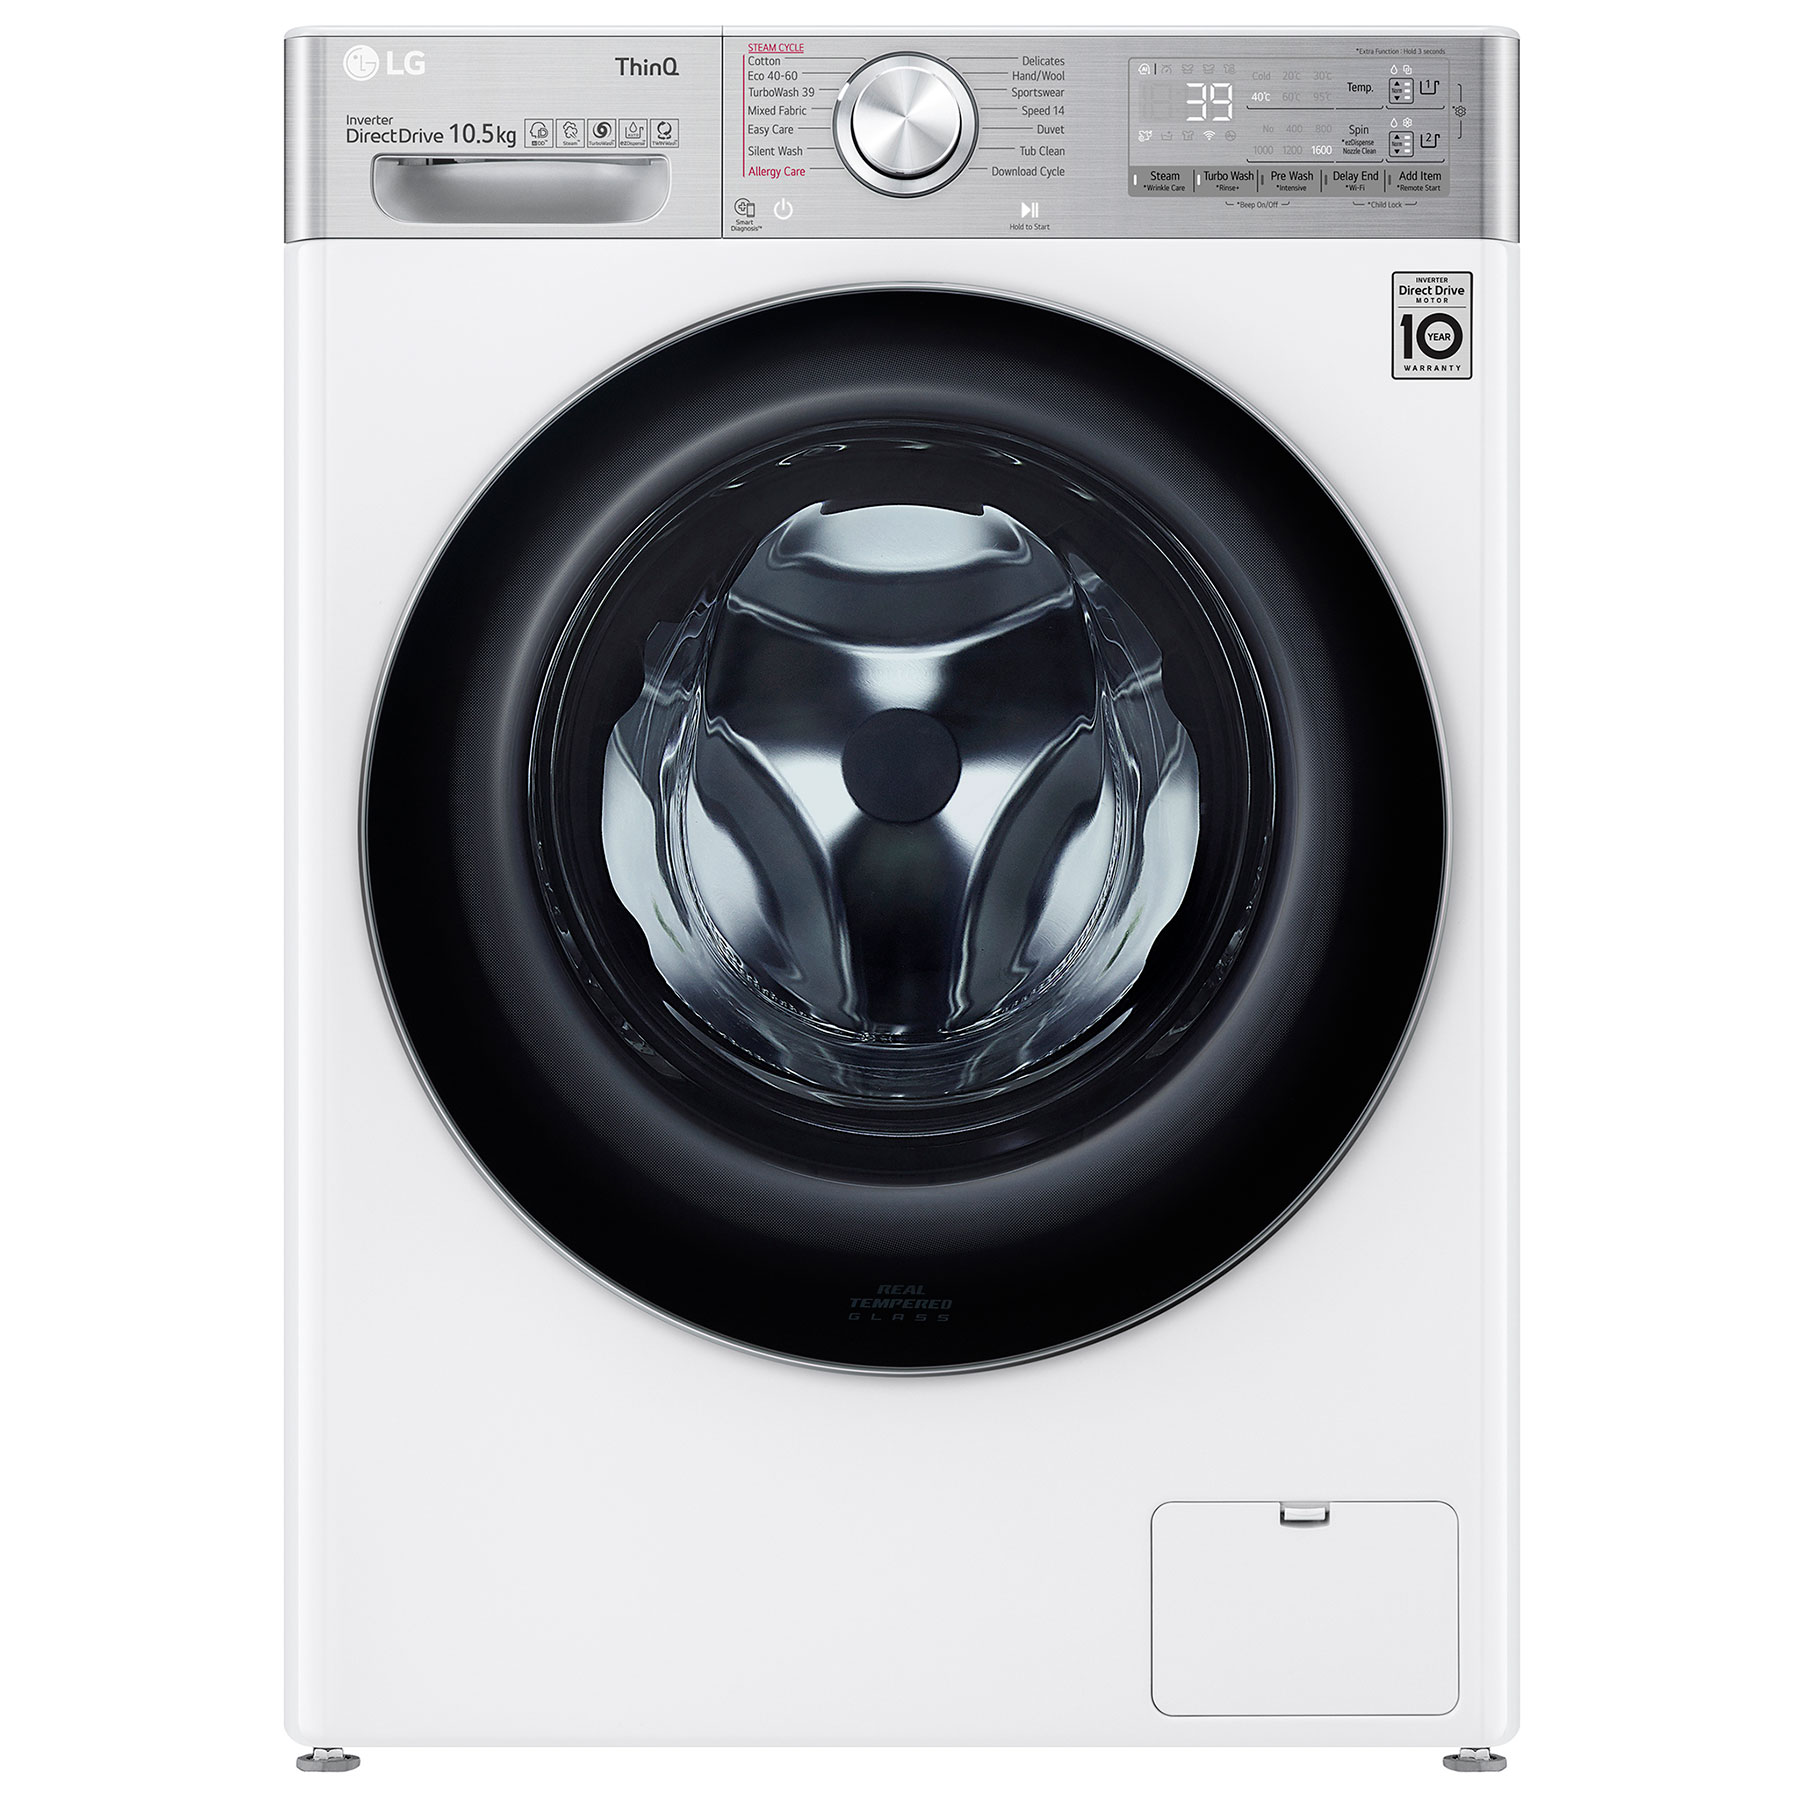 LG F6V1110WTSA Washing Machine in White 1600rpm 10 5kg A Rated